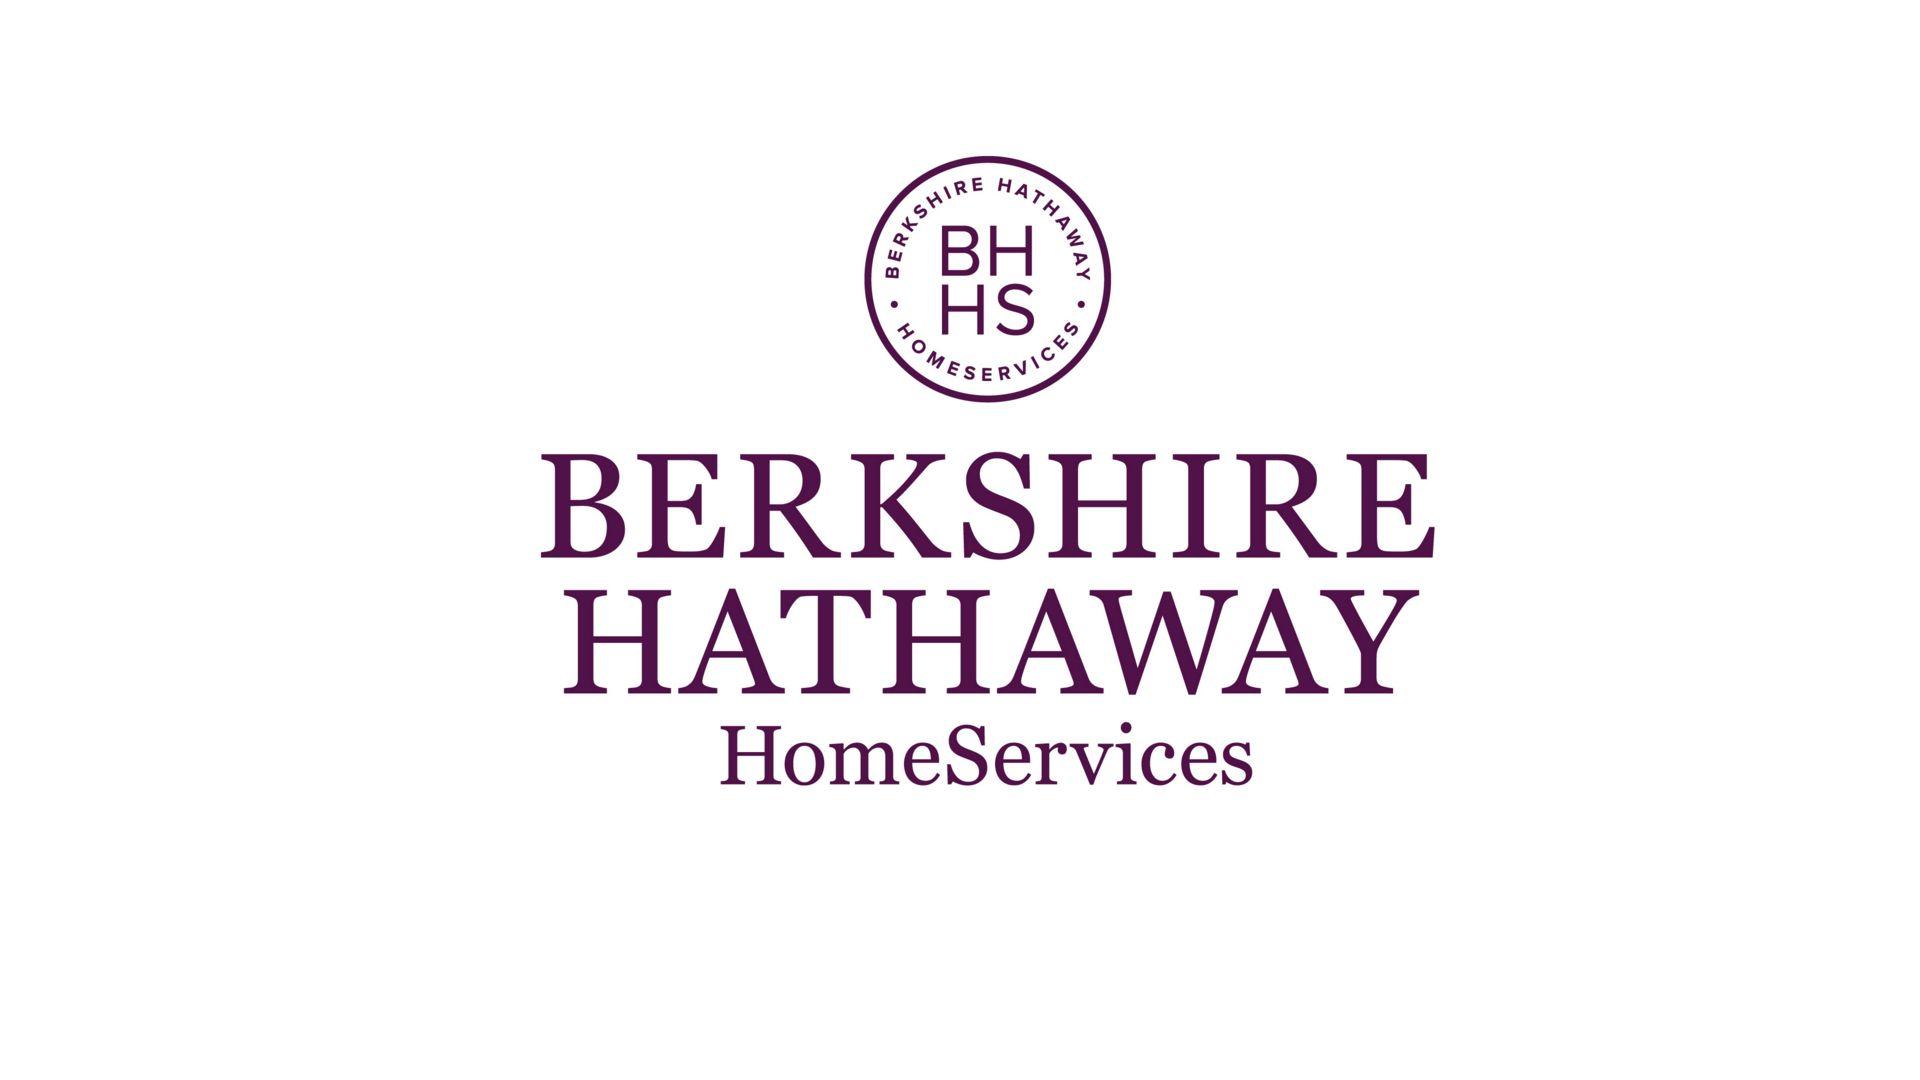 Berkshire Logo - Berkshire Hathaway Logo wallpaper 2018 in Brands & Logos